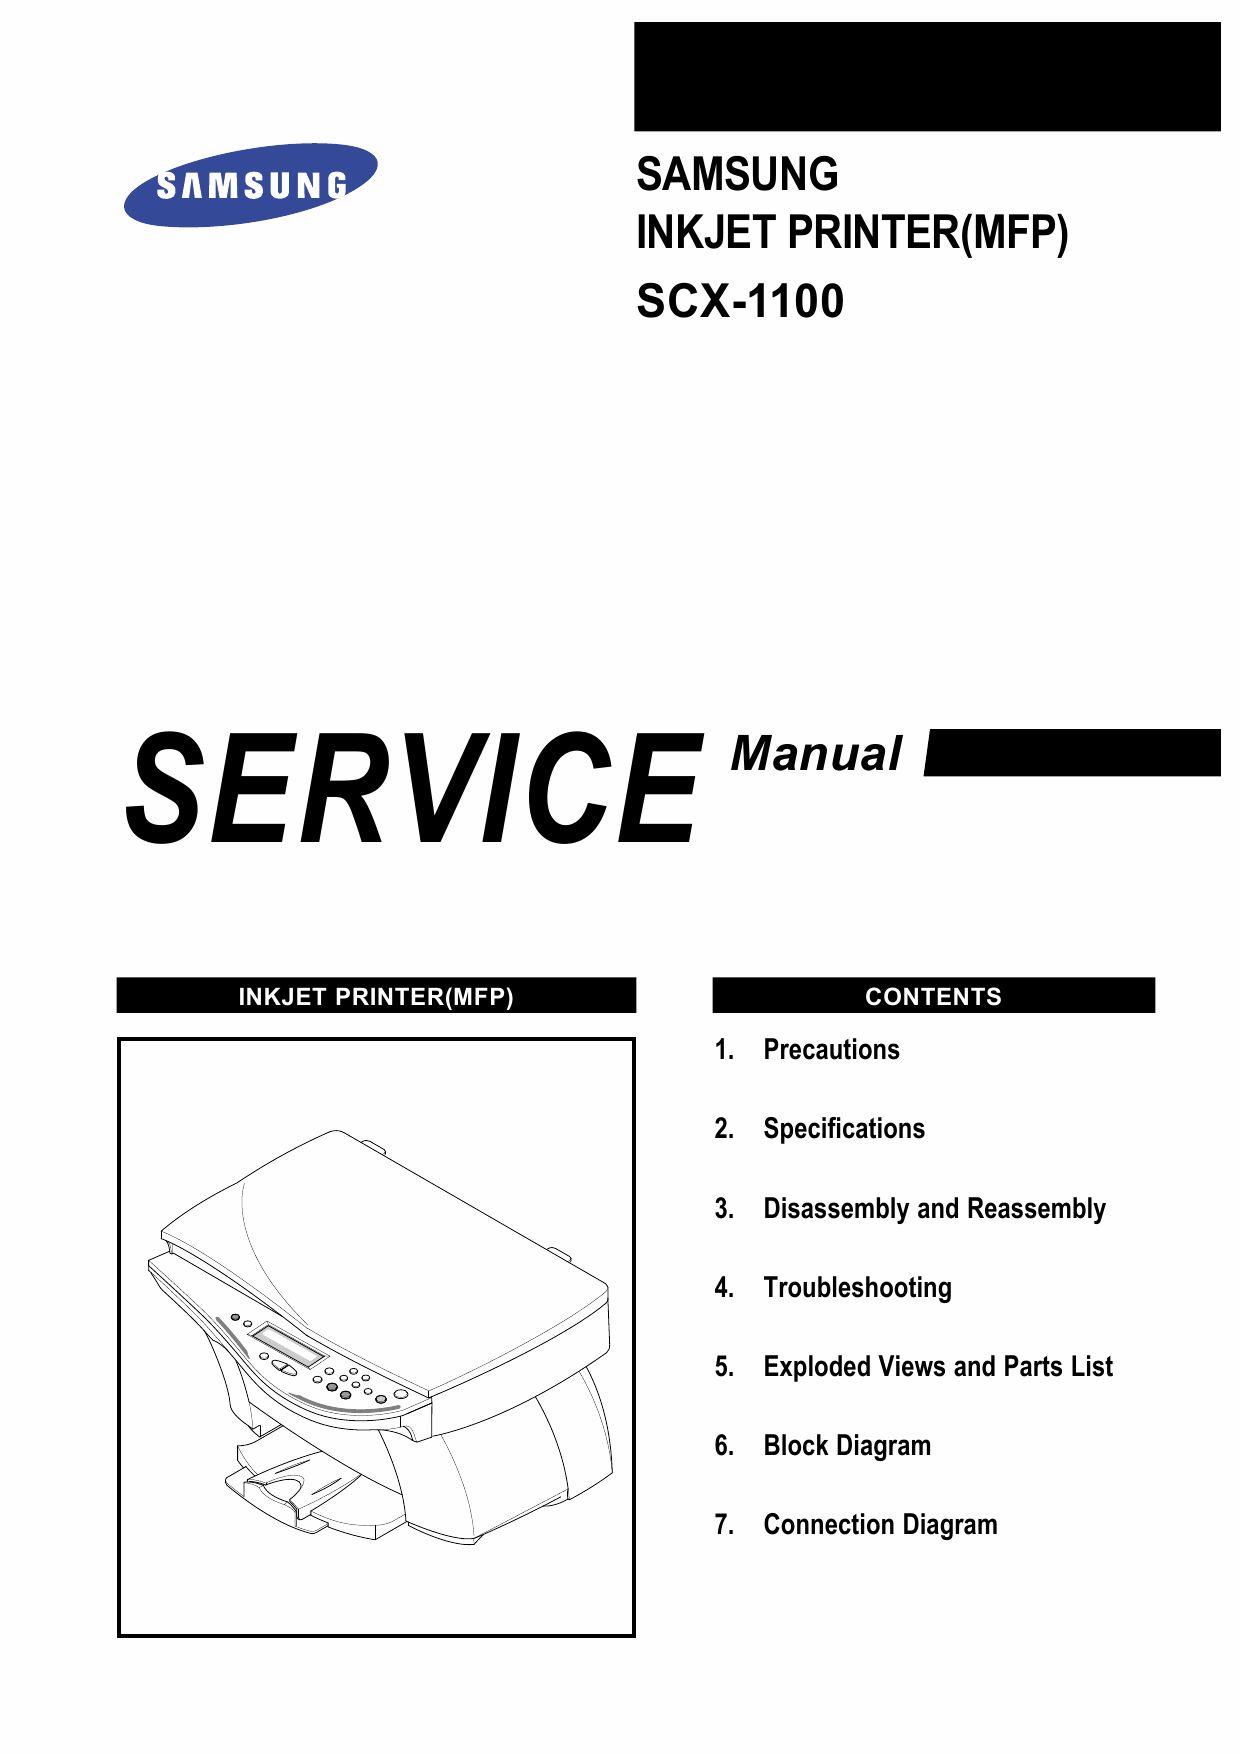 Samsung InkJet-MFP SCX-1100 Parts and Service Manual-1